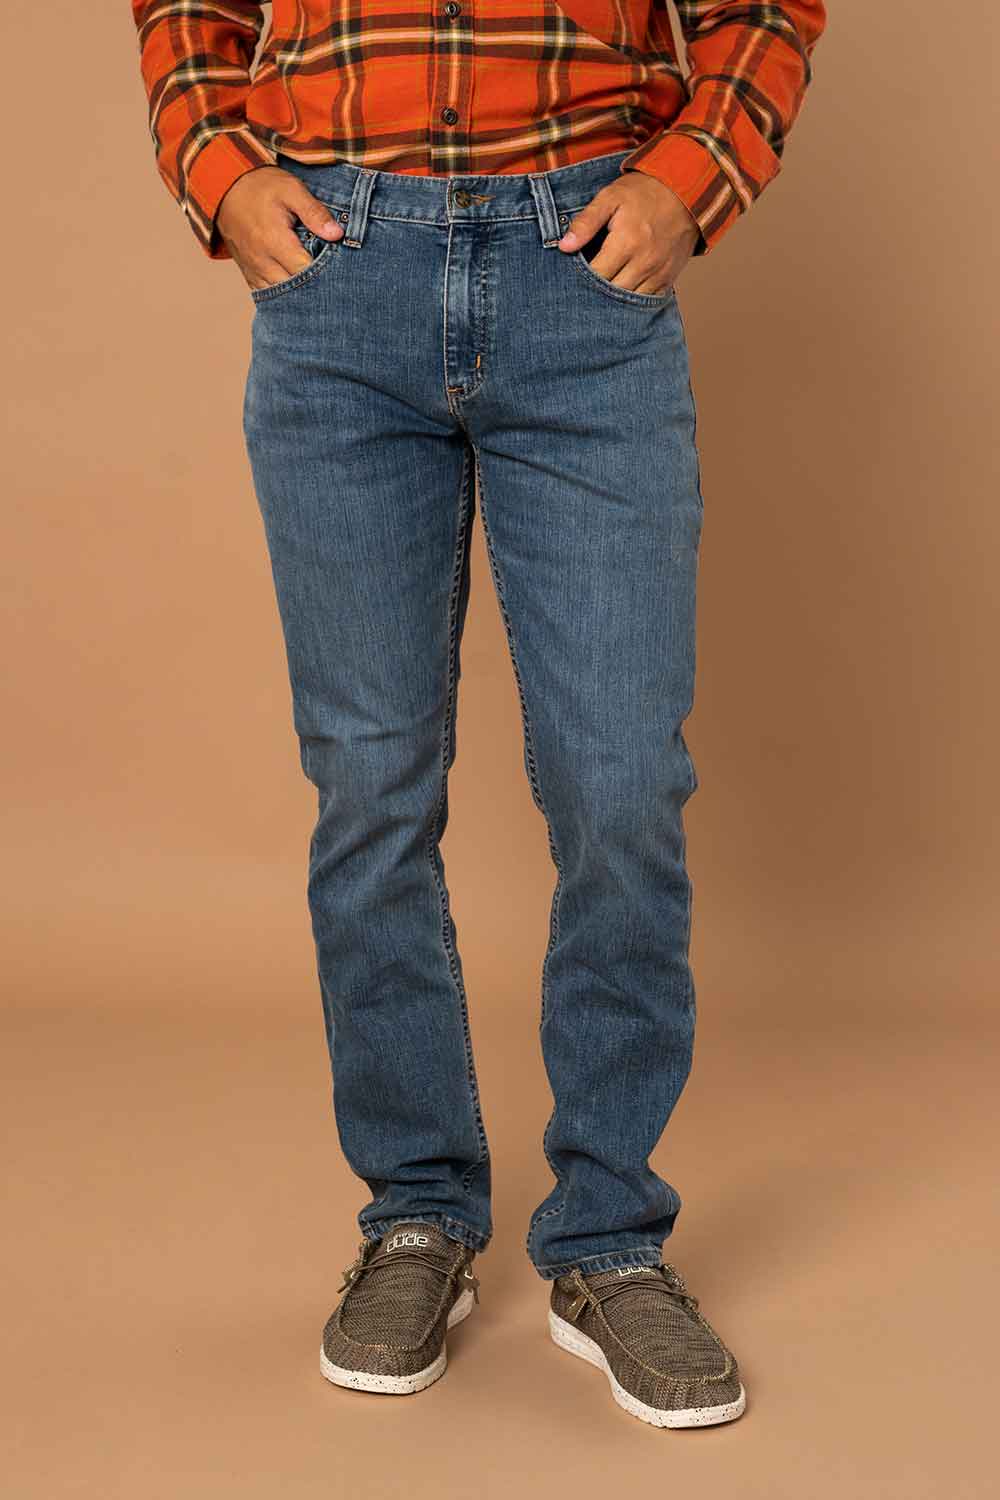 kapre sprogfærdighed Burma Carhartt Rugged Flex Relaxed Low Rise Five Pocket Tapered Jeans for Me –  Glik's